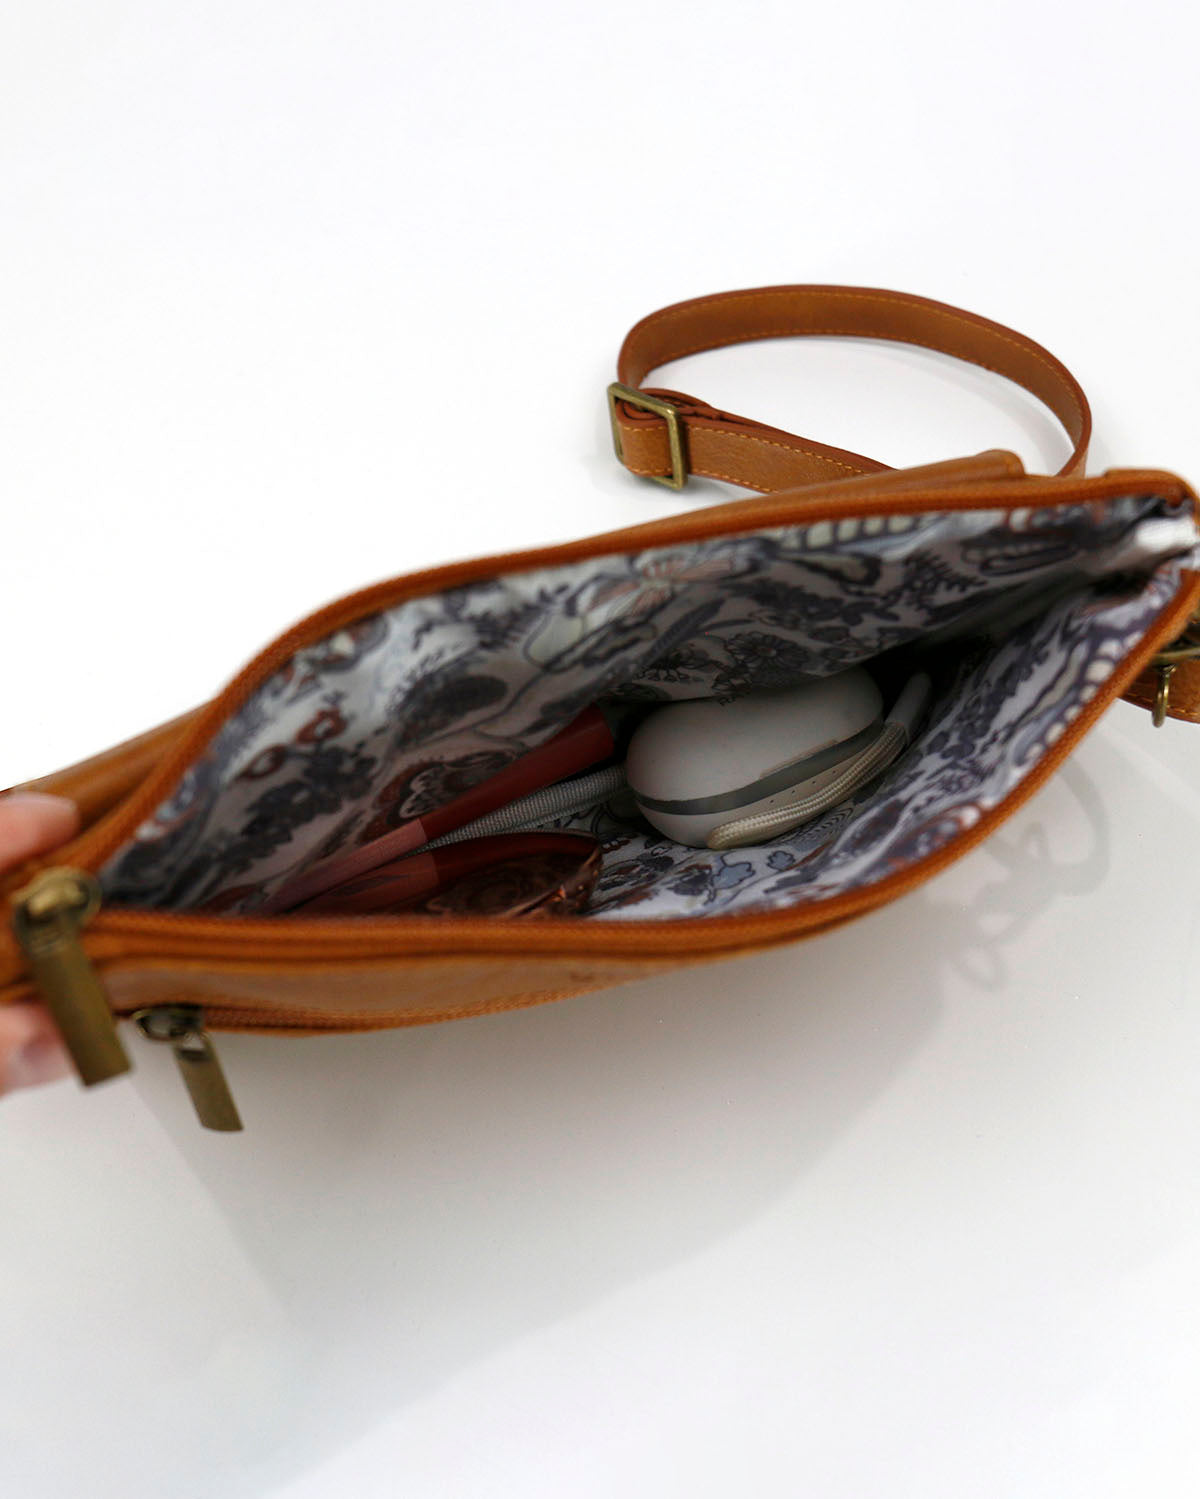 Vintage Plaid Satchel Crossbody Bag, Pu Leather Textured Bag Purse